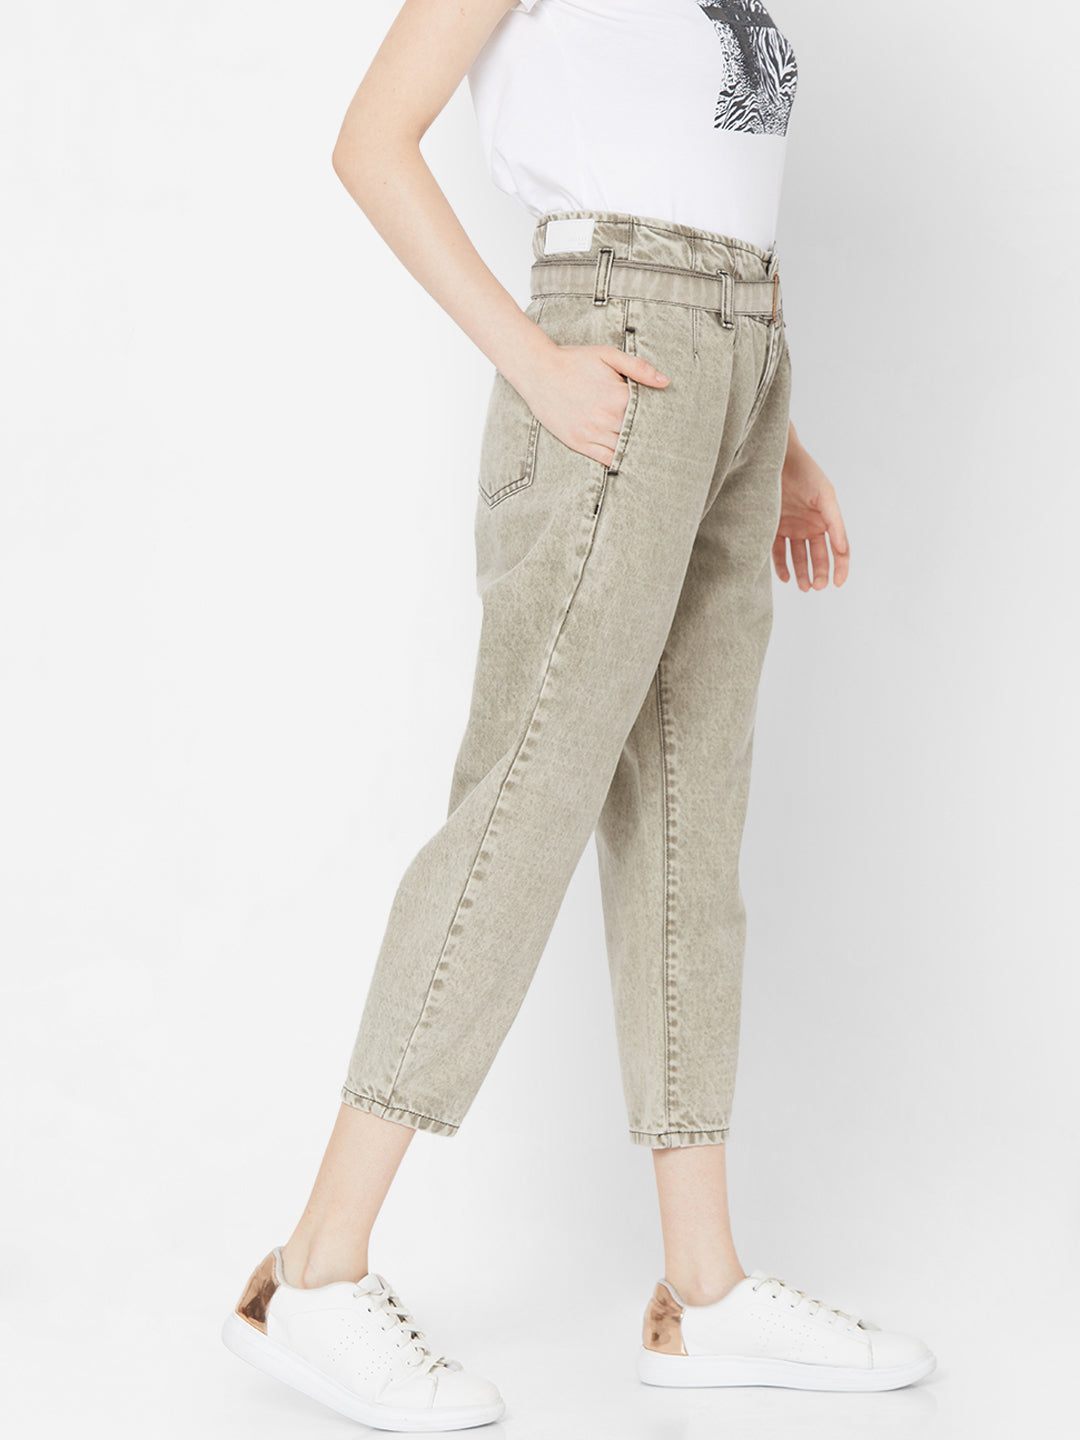 Spykar Women Black Cotton Skinny Fit Regular Length Jeans (YNR)